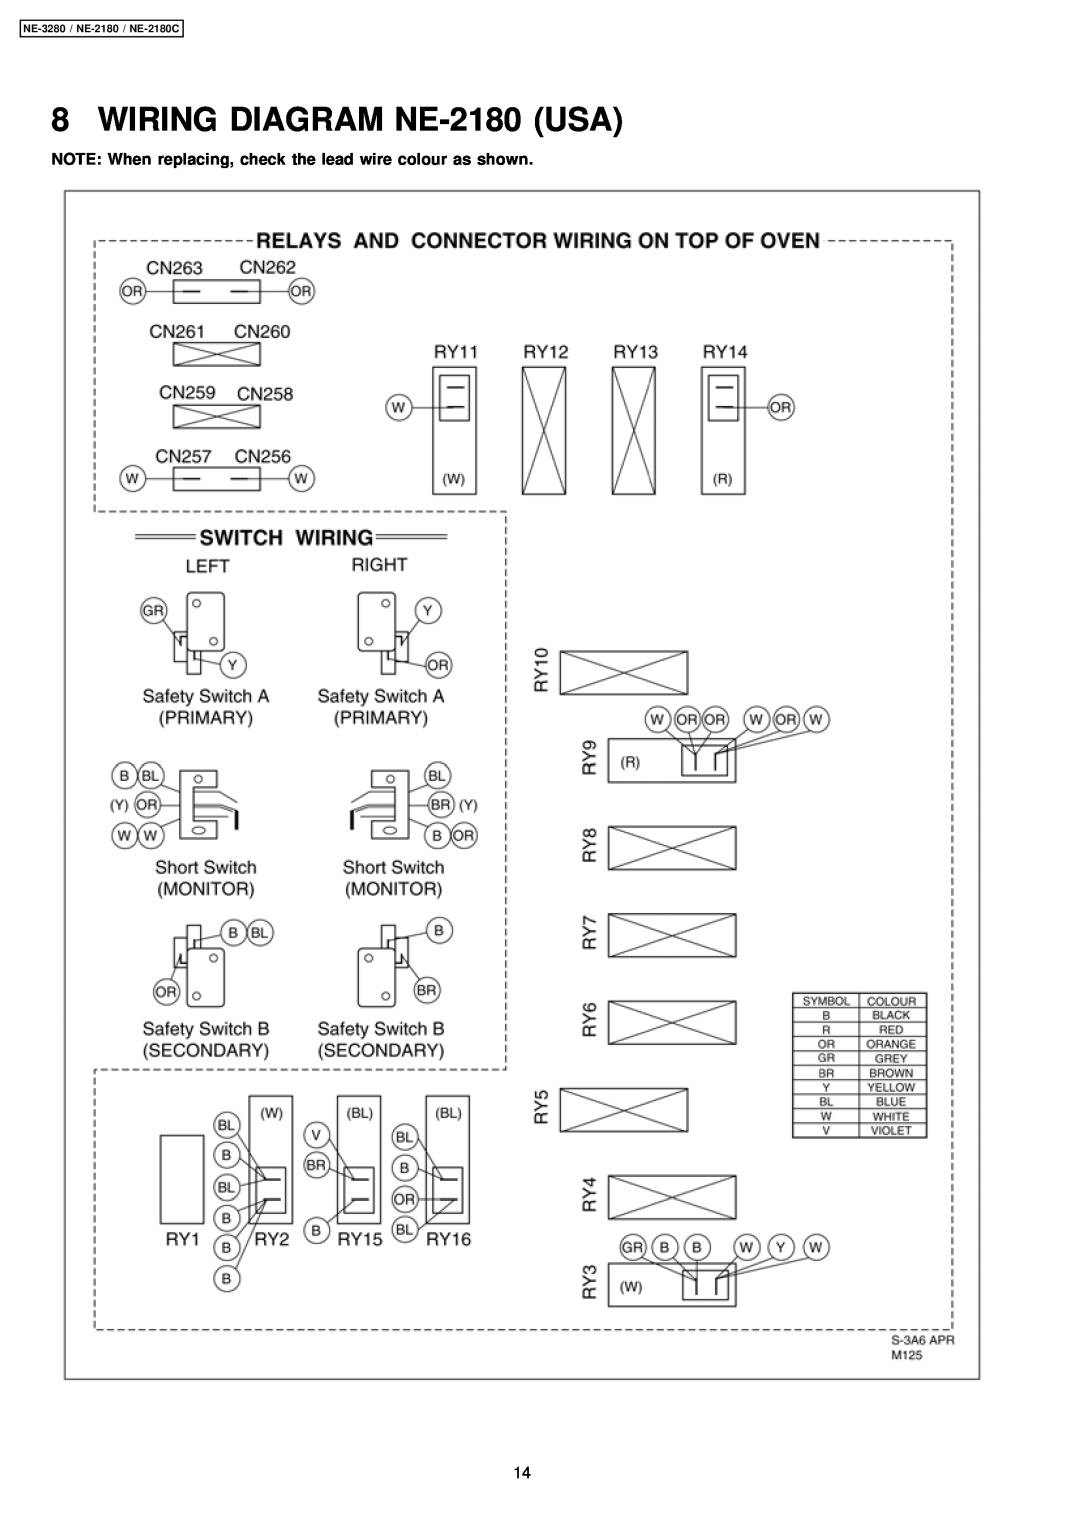 Panasonic manual WIRING DIAGRAM NE-2180USA, NE-3280 / NE-2180 / NE-2180C 